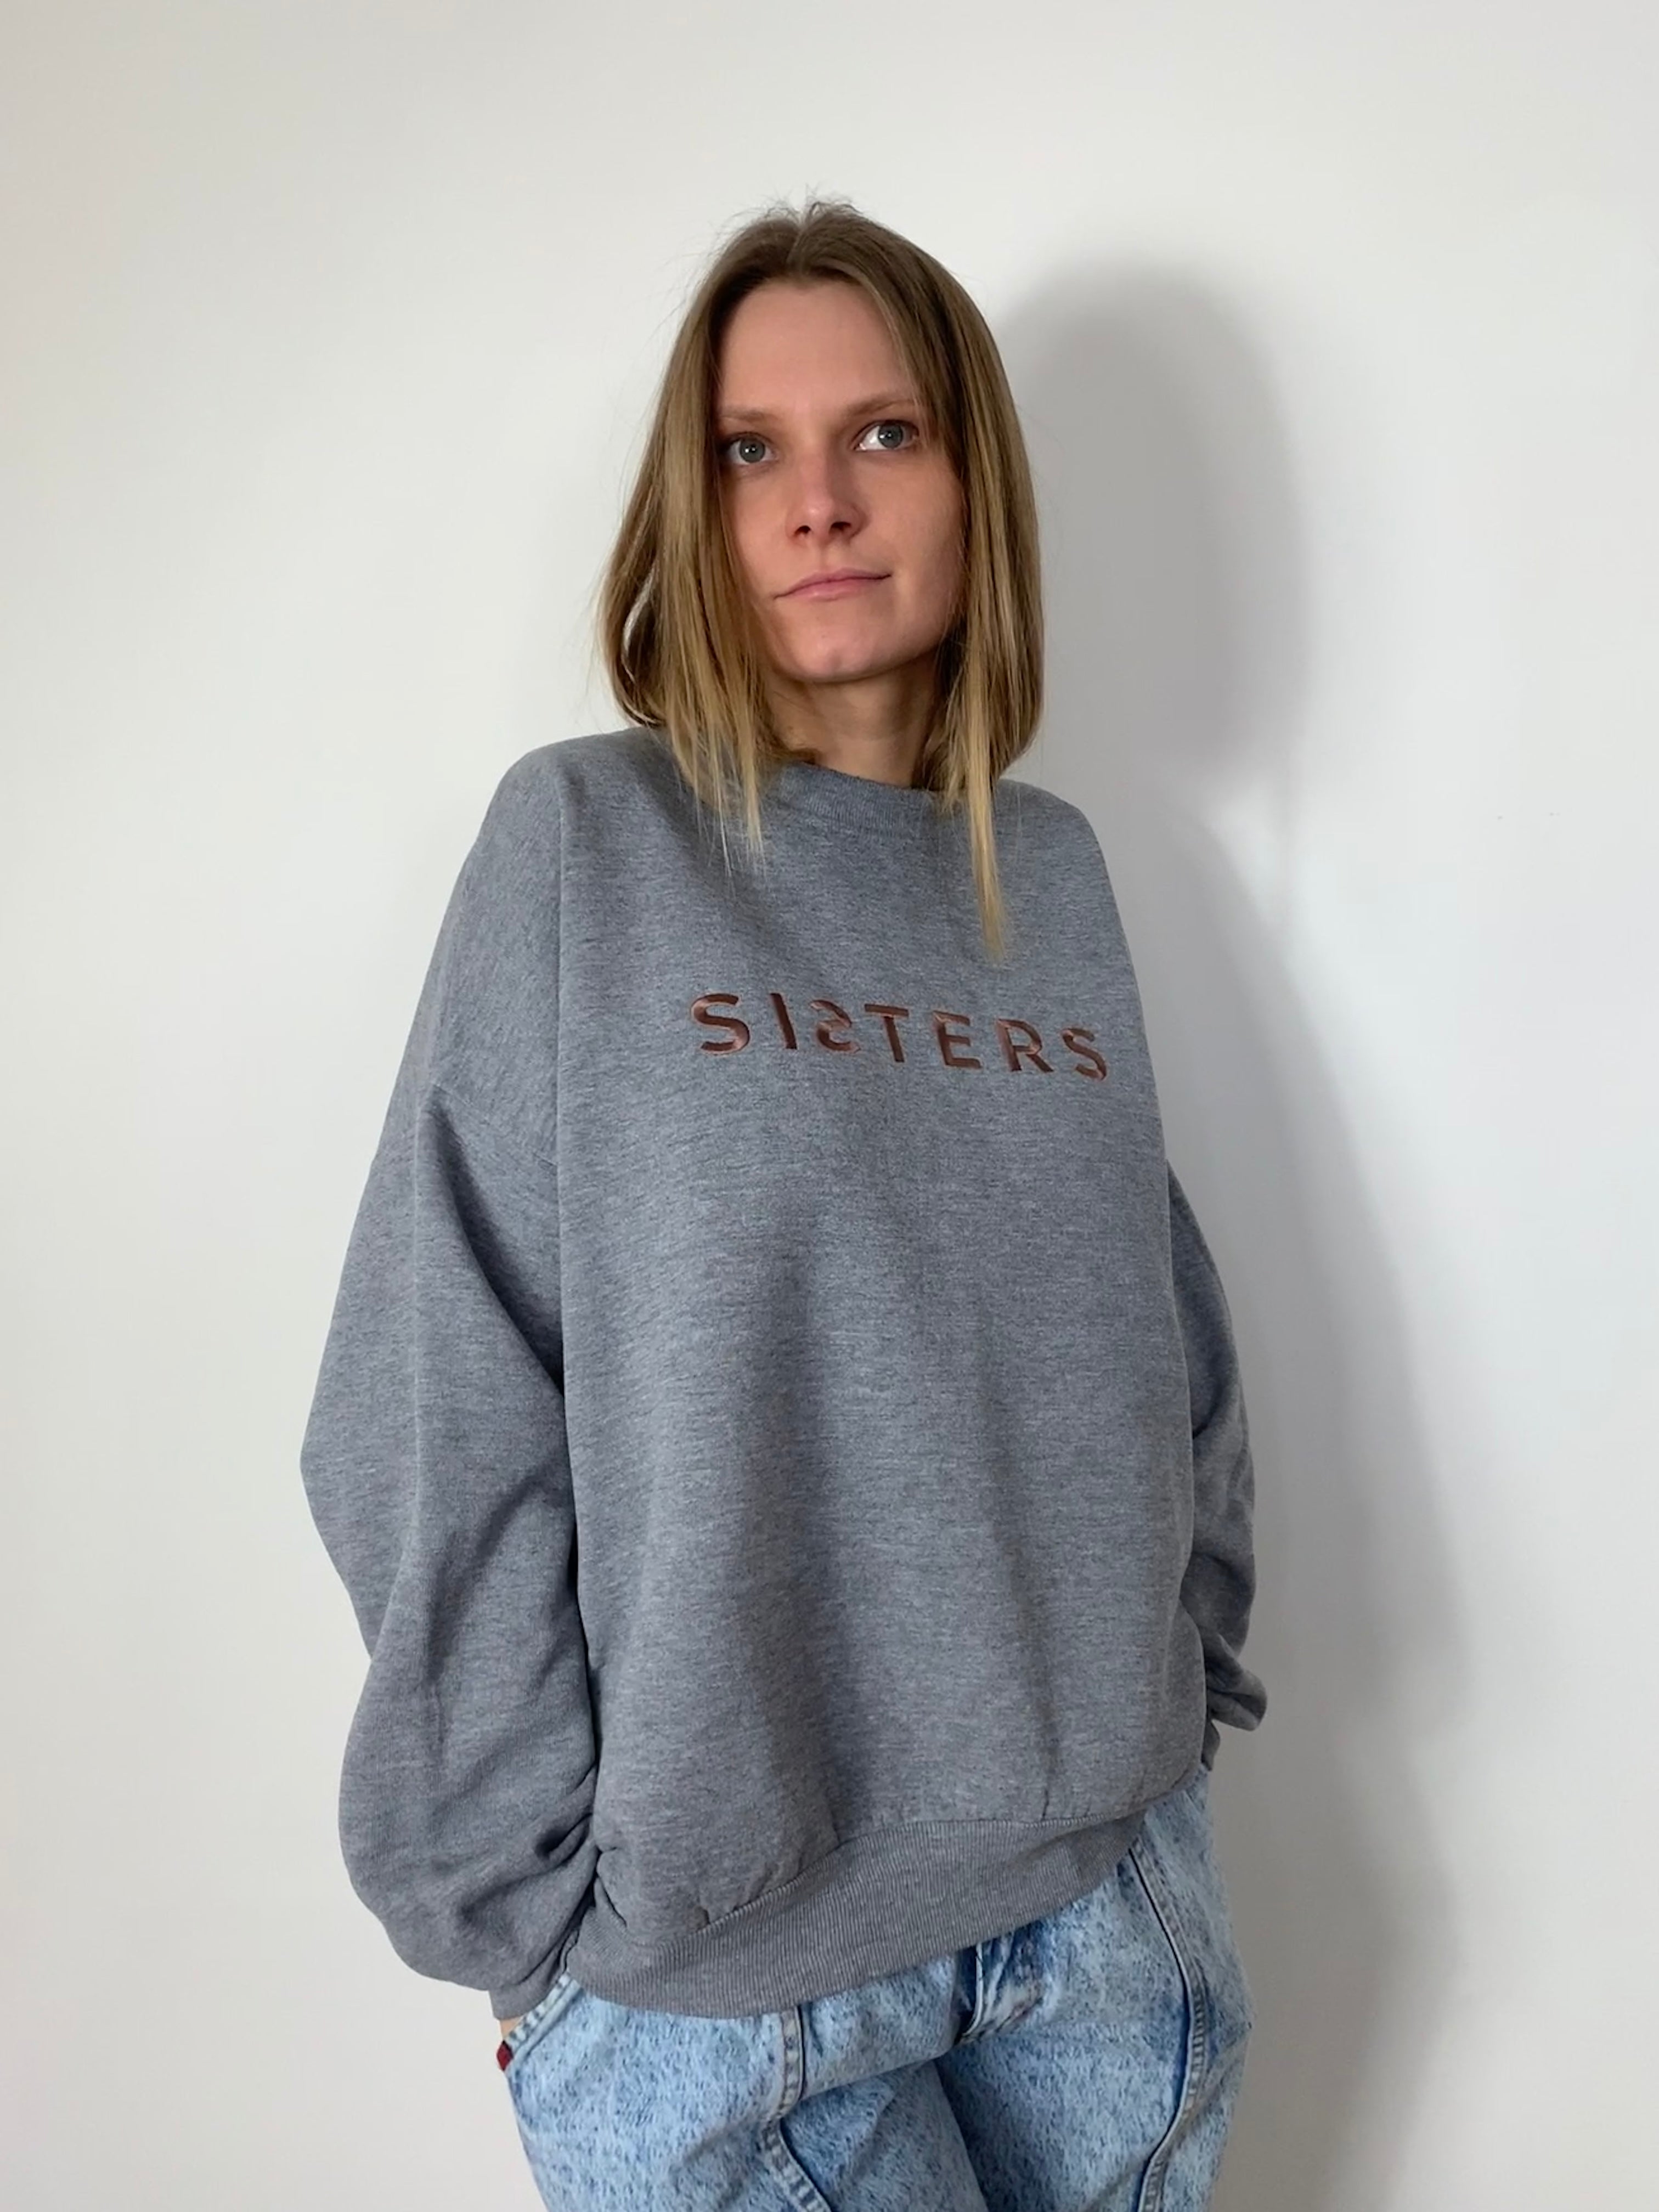 SISTERS embroidered sweatshirt 11